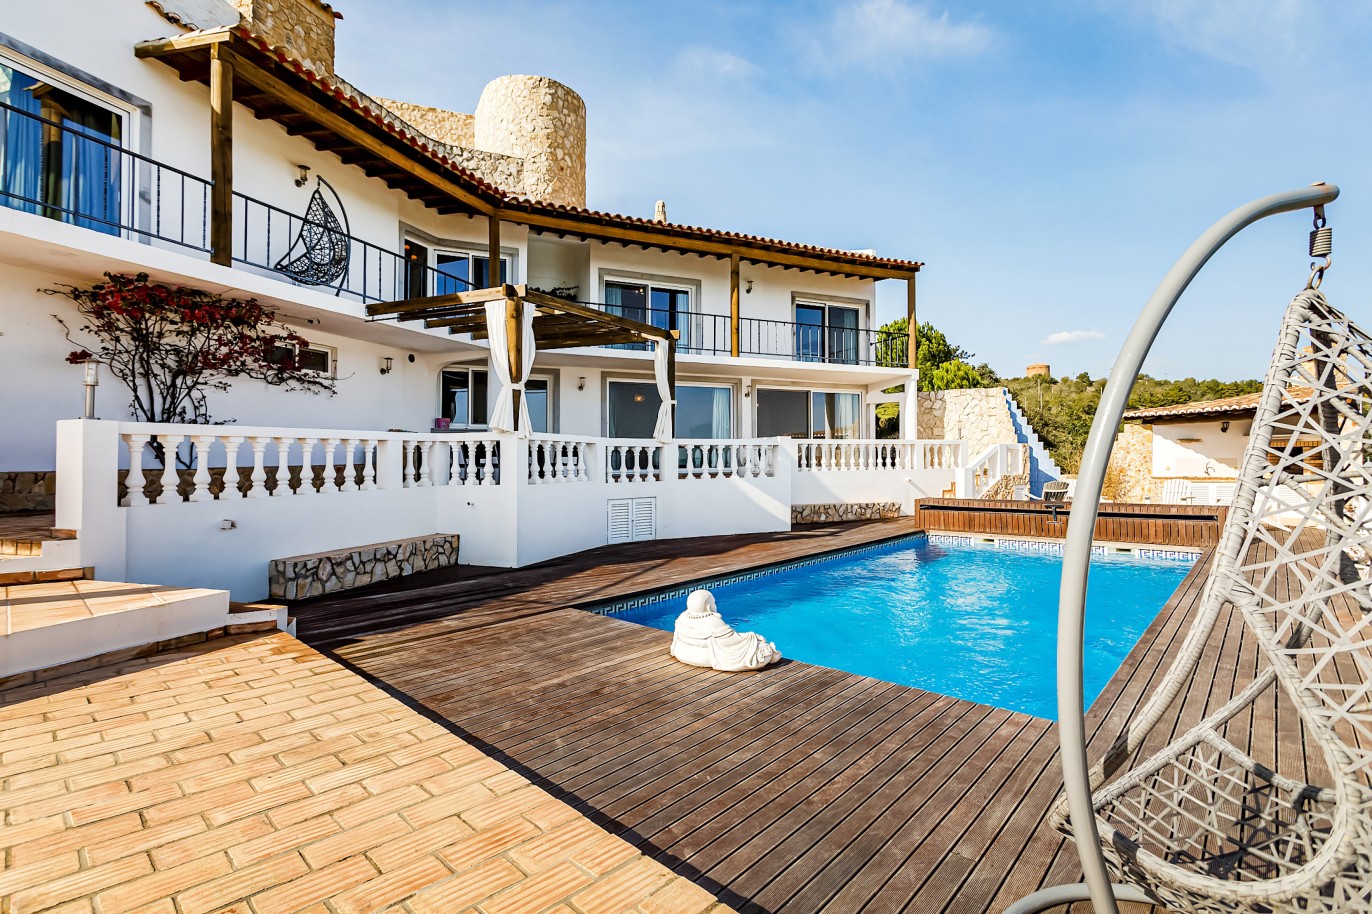 5 Bedroom Villa with sea view, for sale, in Faro, Algarve_218183